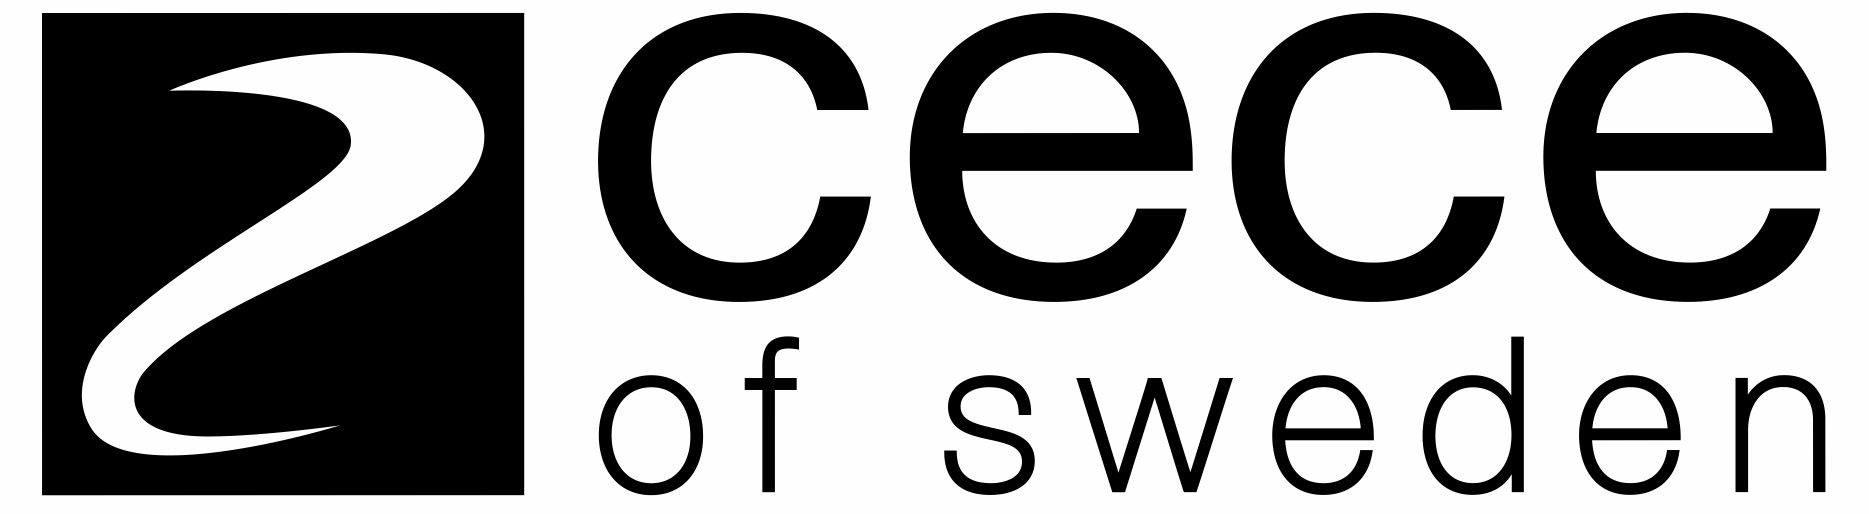 Cece Of Sweden – Produse coafor profesionale